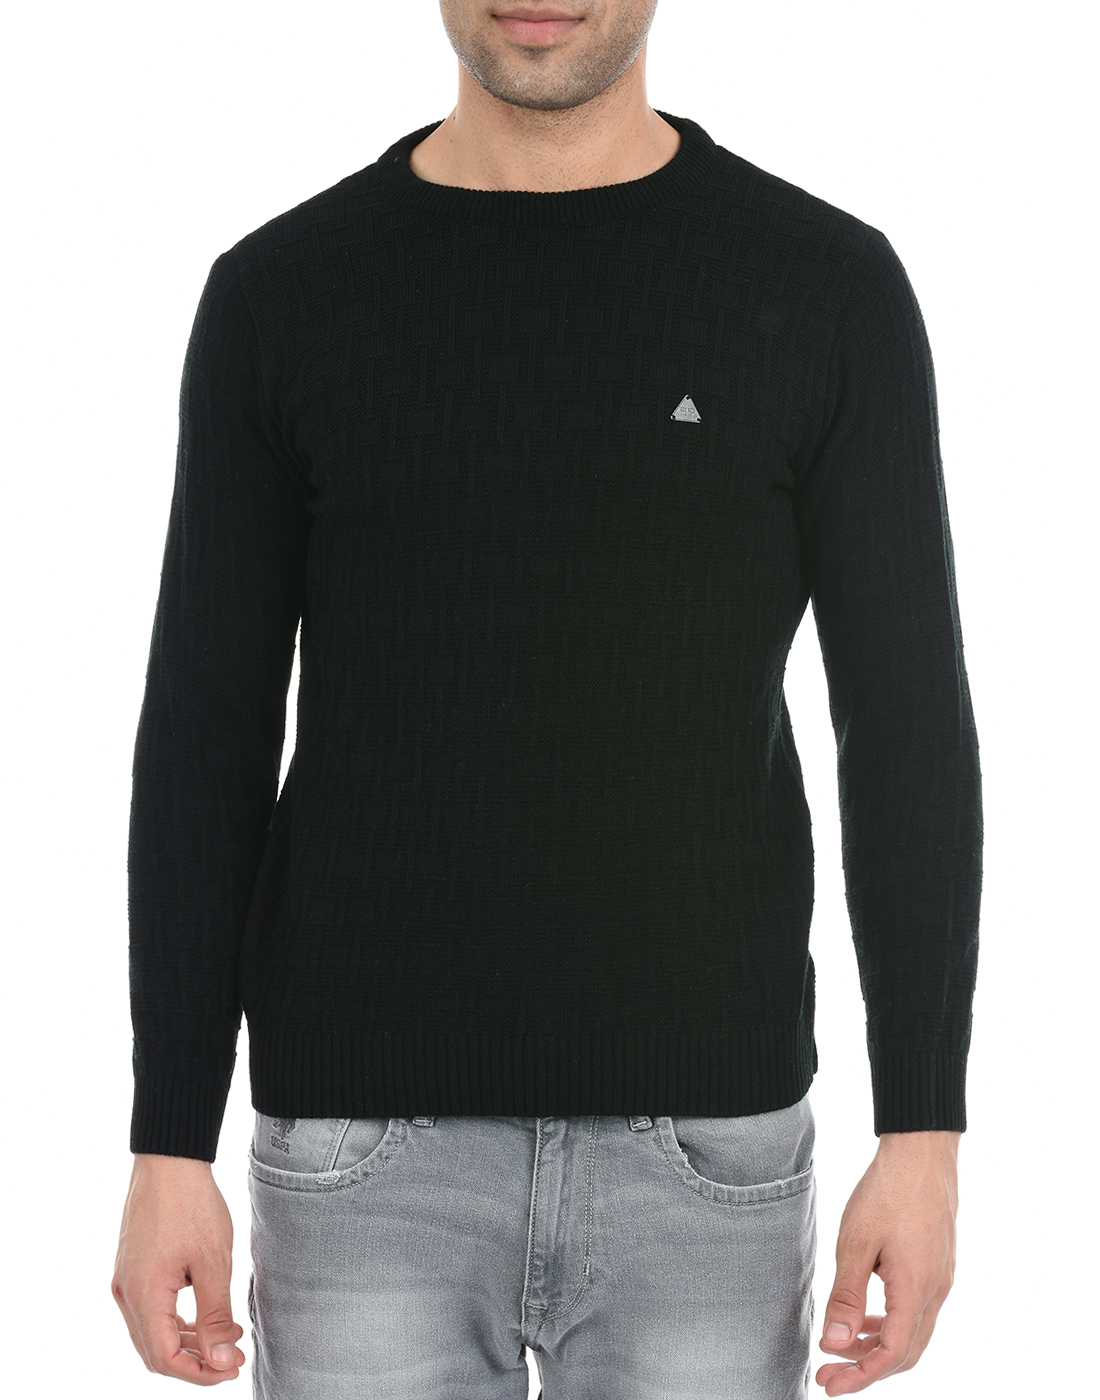 Cloak & Decker by Monte Carlo Men Self Design Black Sweater